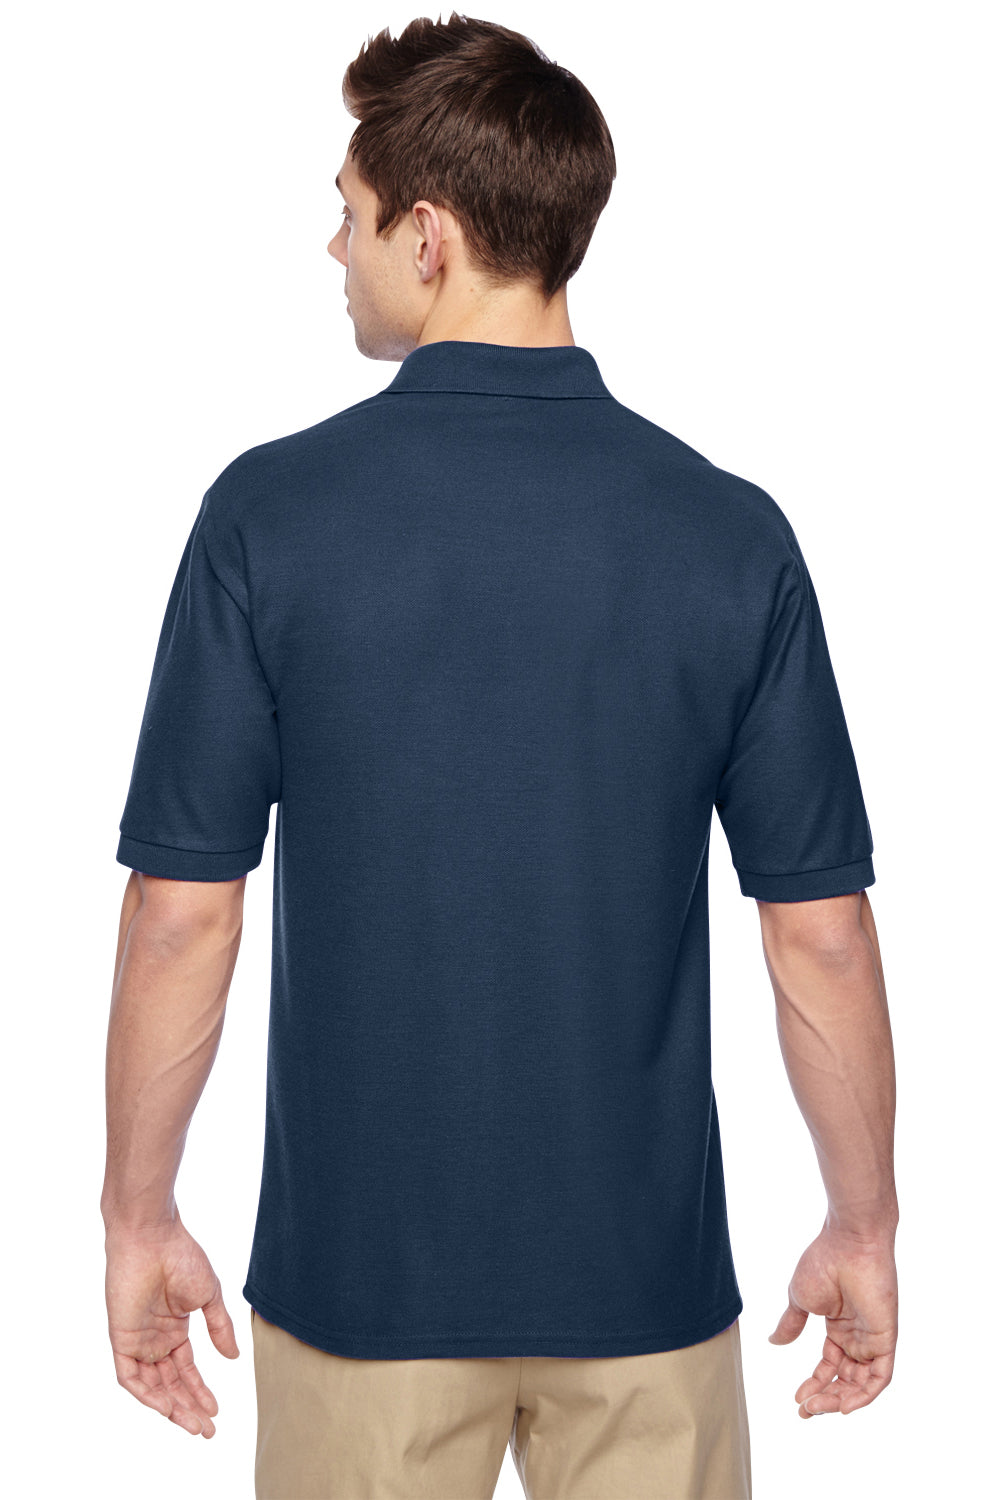 Jerzees 537MSR Mens Easy Care Moisture Wicking Short Sleeve Polo Shirt Navy Blue Back